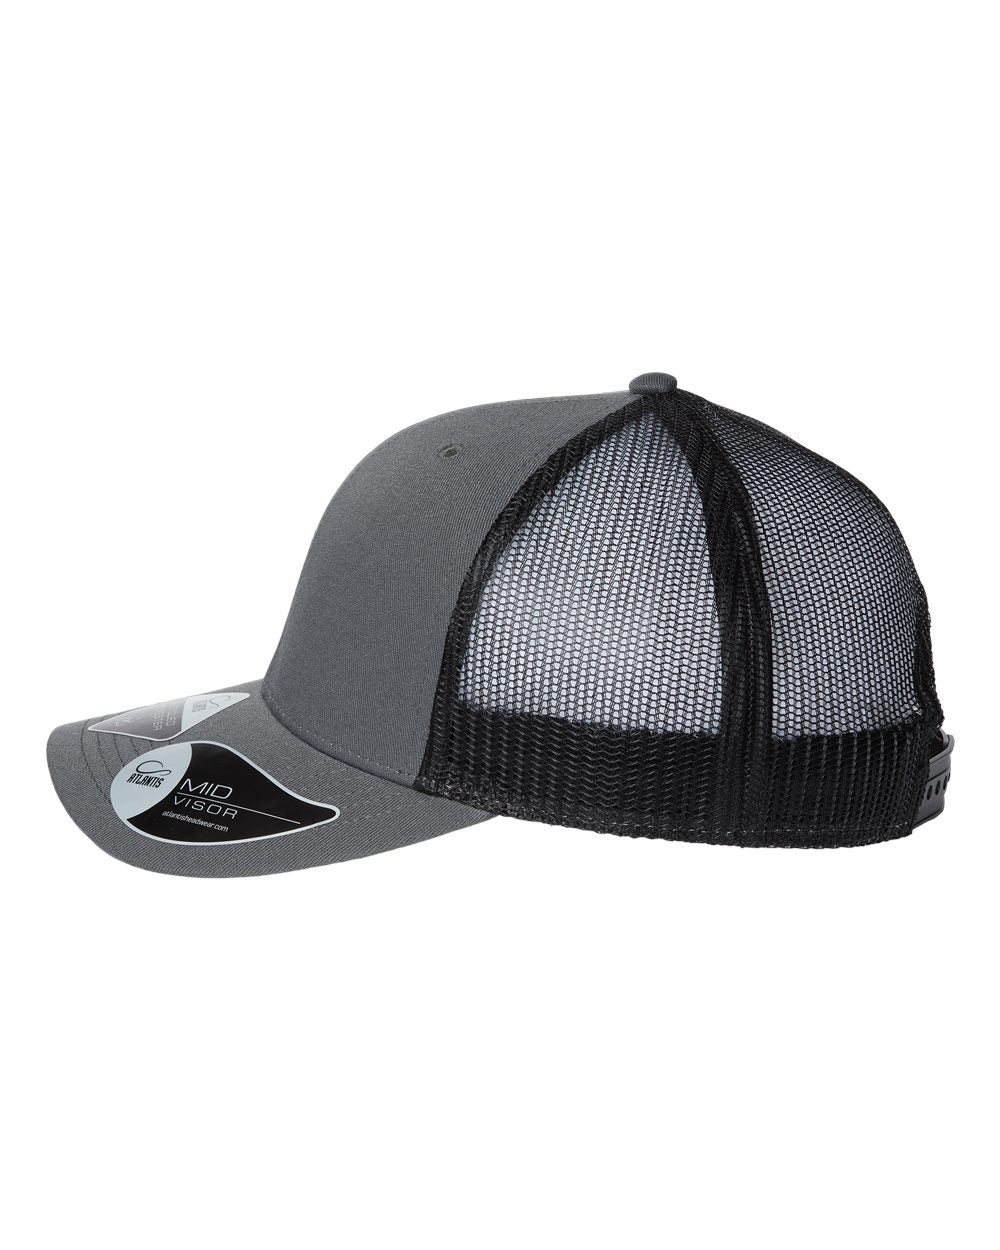 Customizable Atlantis Headwear Bryce Trucker Cap in gray